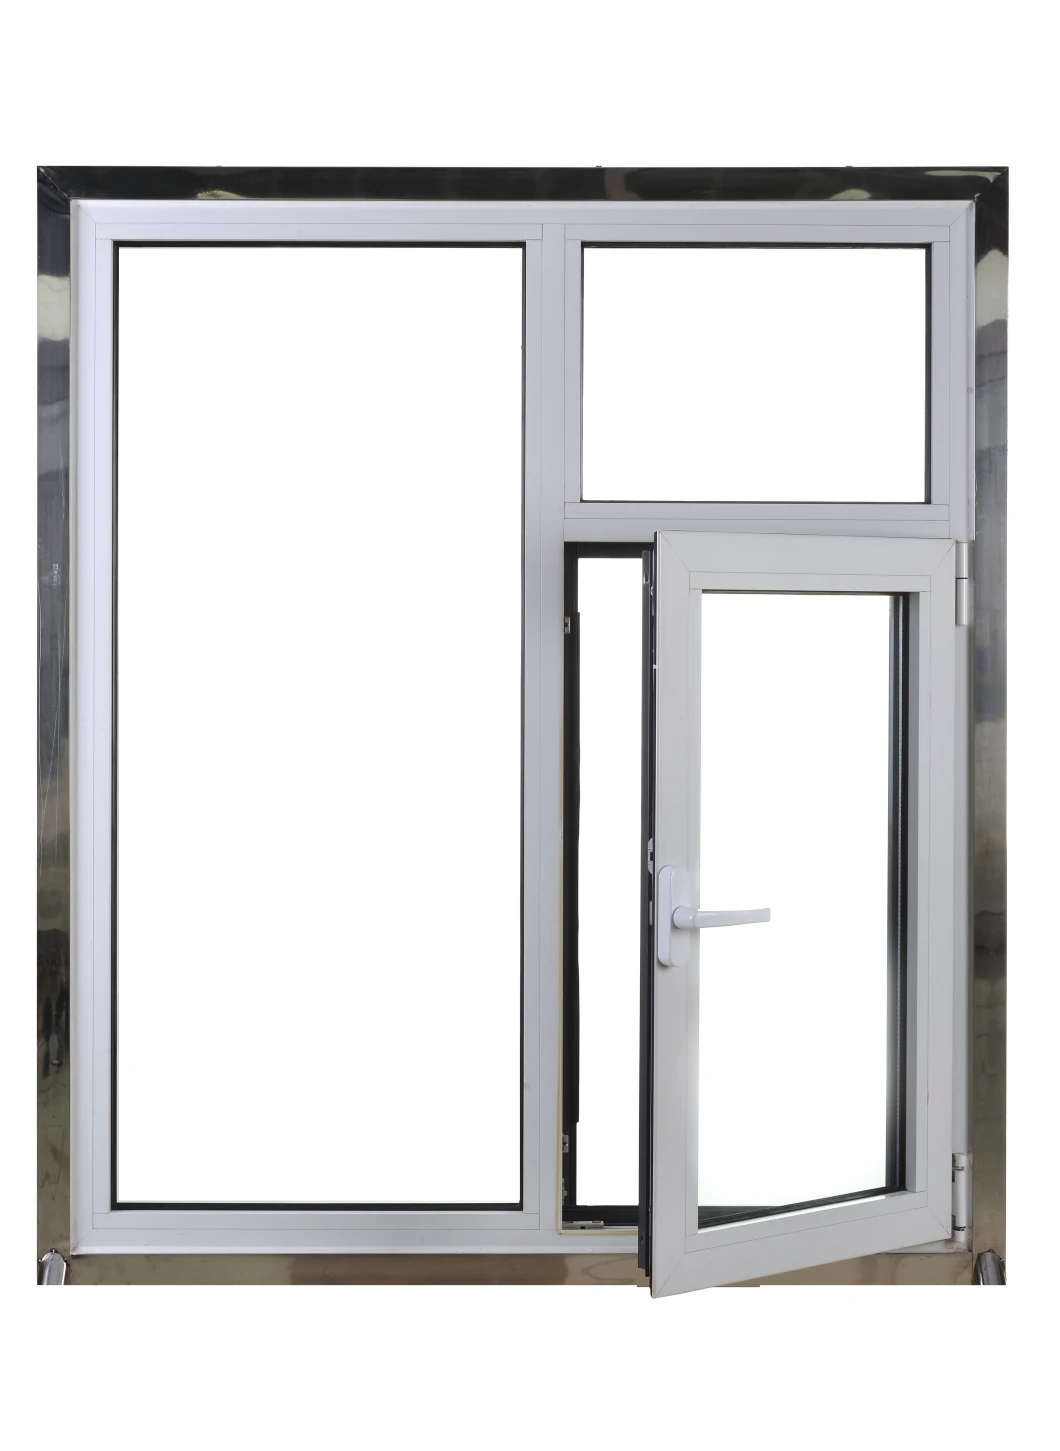 Aluminium Windows / Aluminium Doors Windows / Aluminium Casement Window